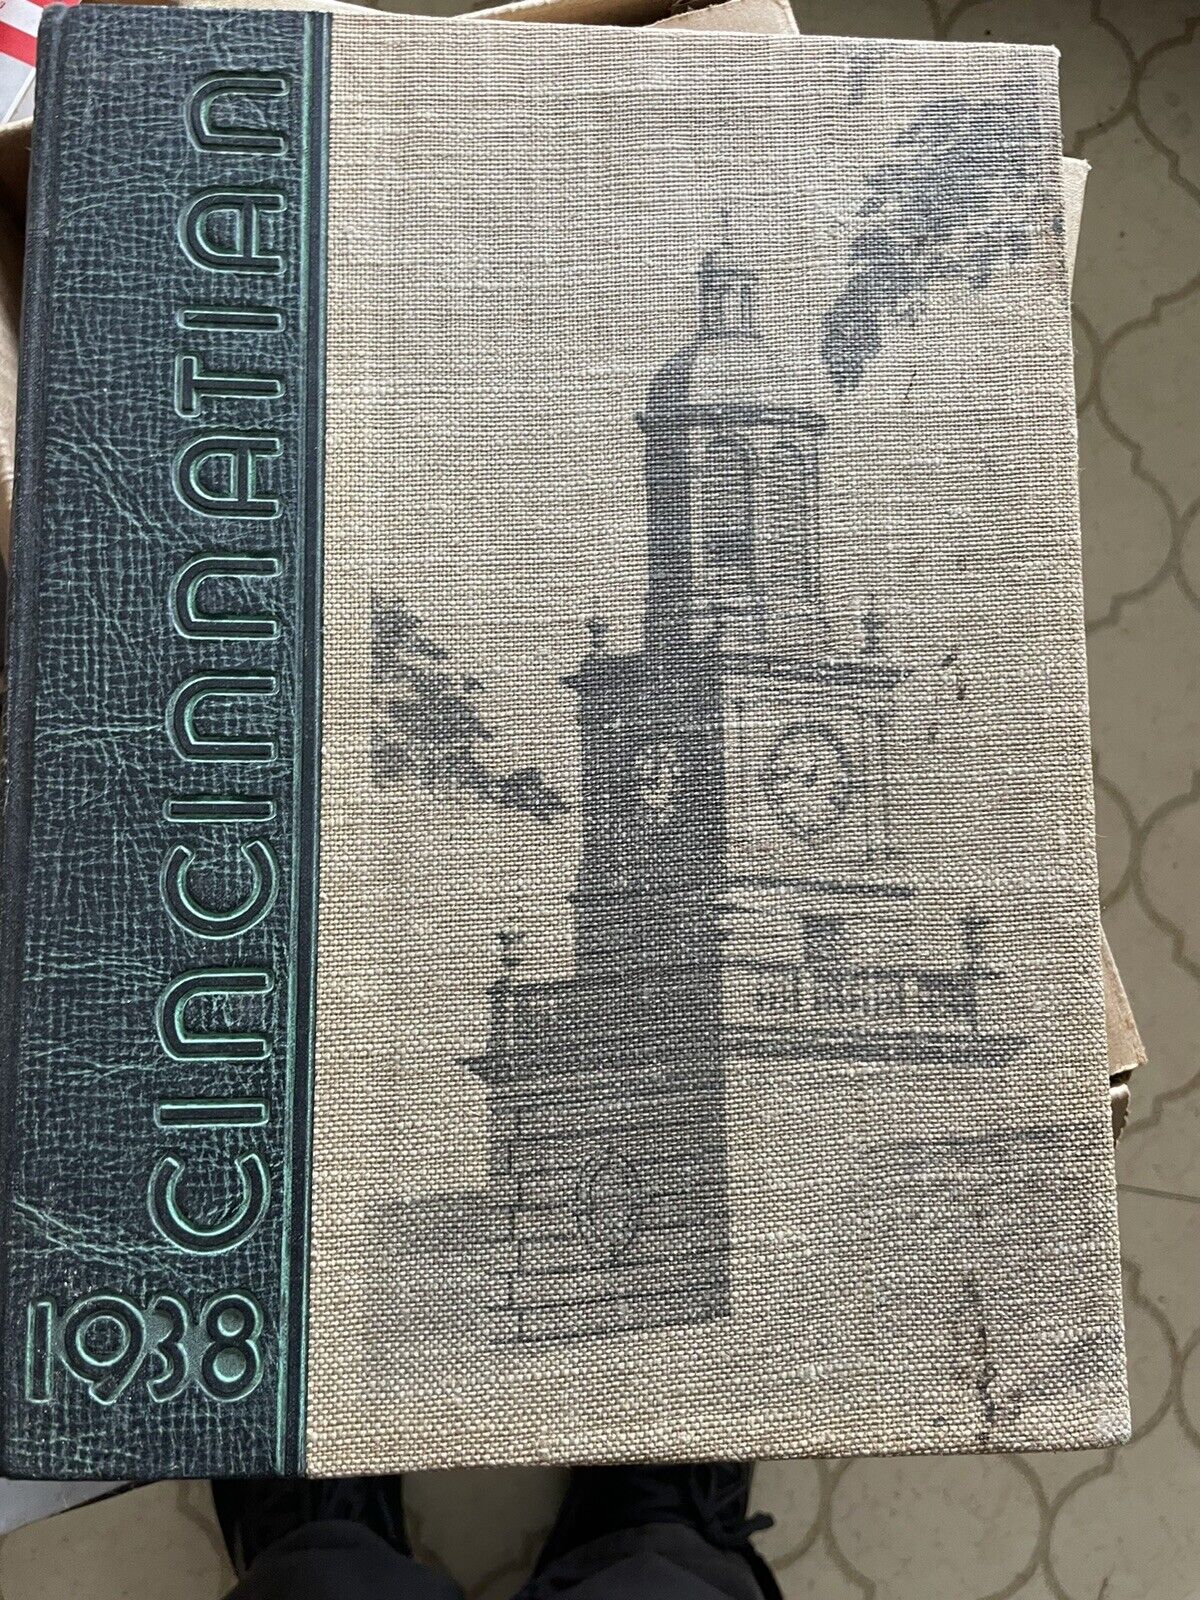 The University of Cincinnati Yearbook 1938 The Cincinnatian 168A